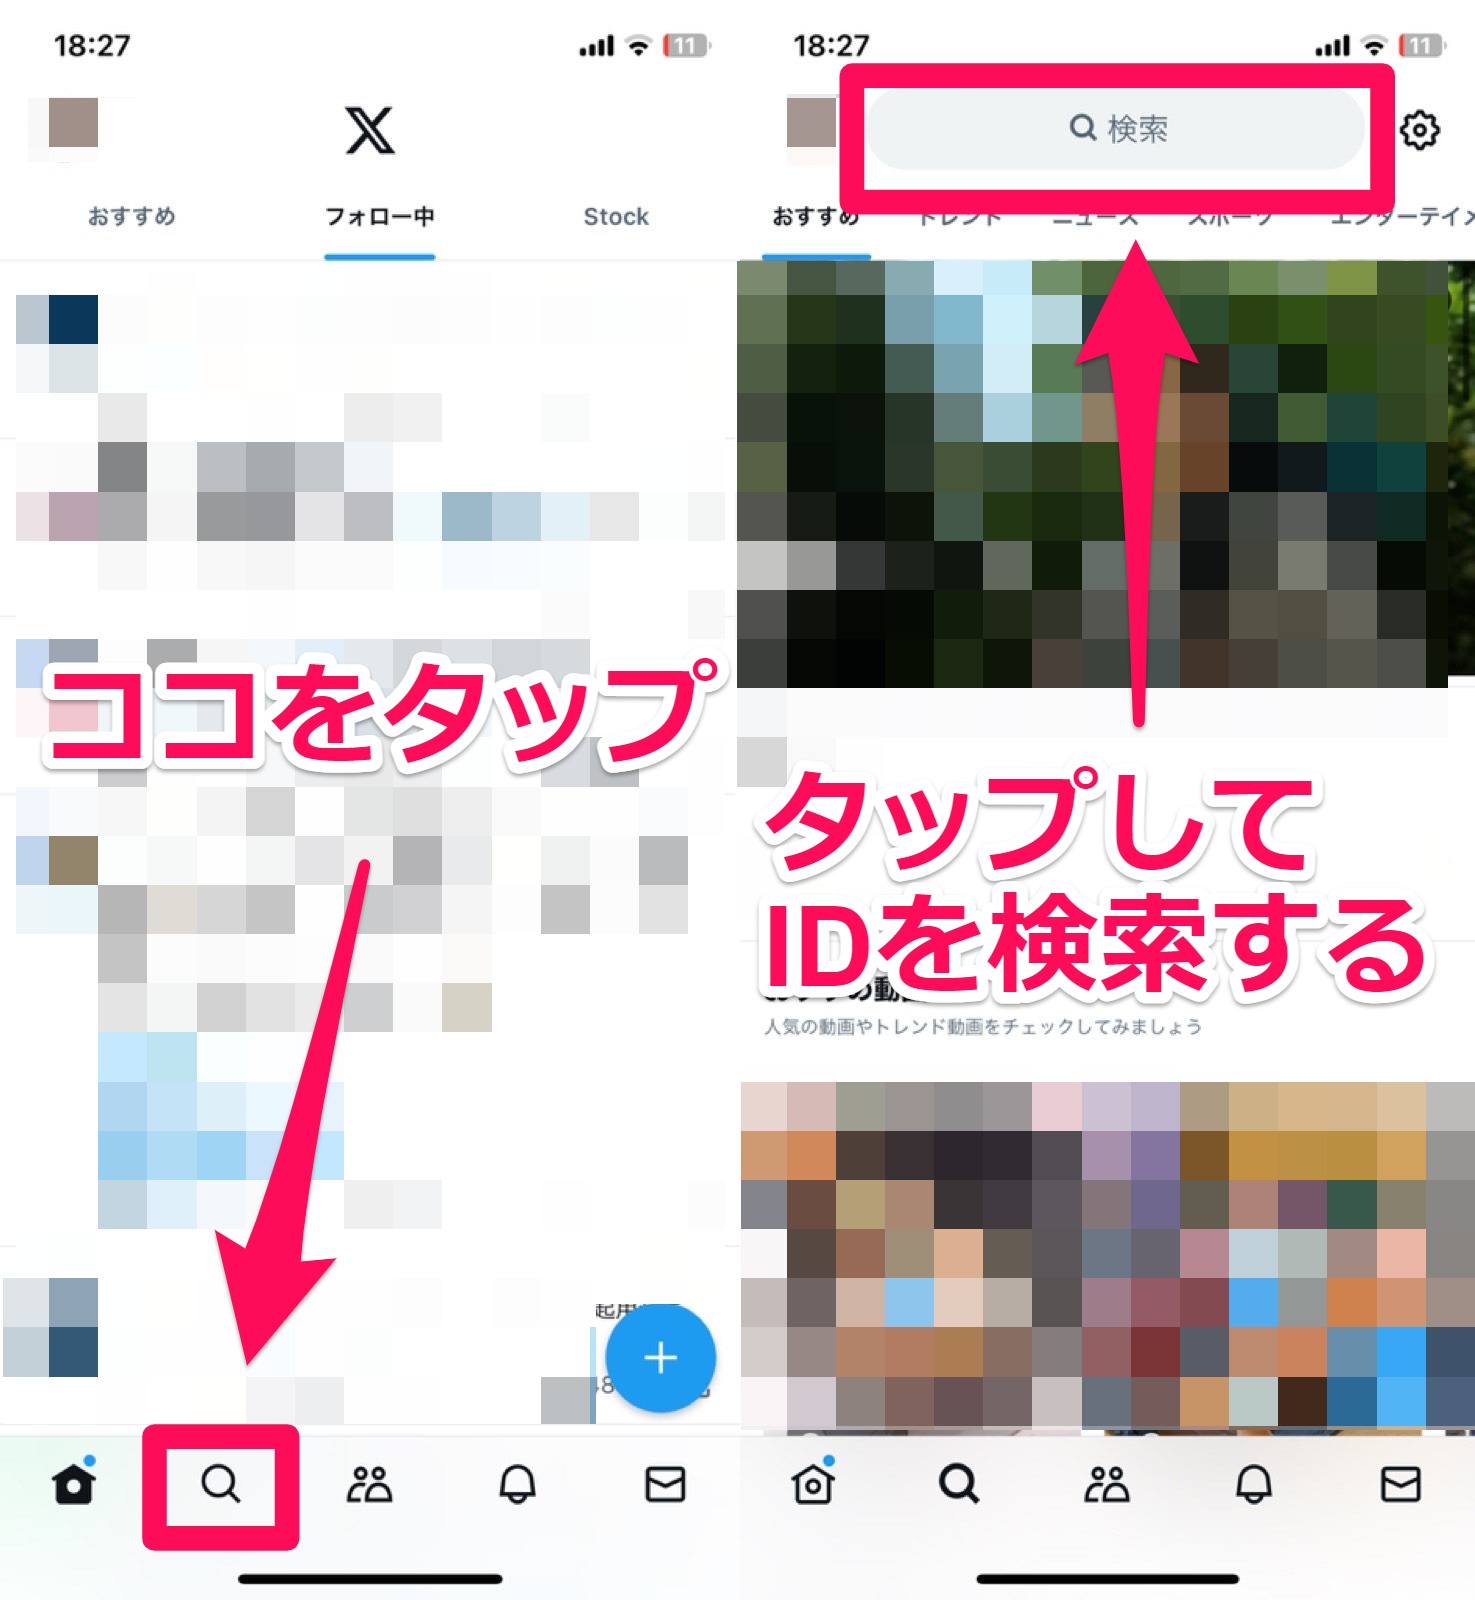 Twitter-ID検索